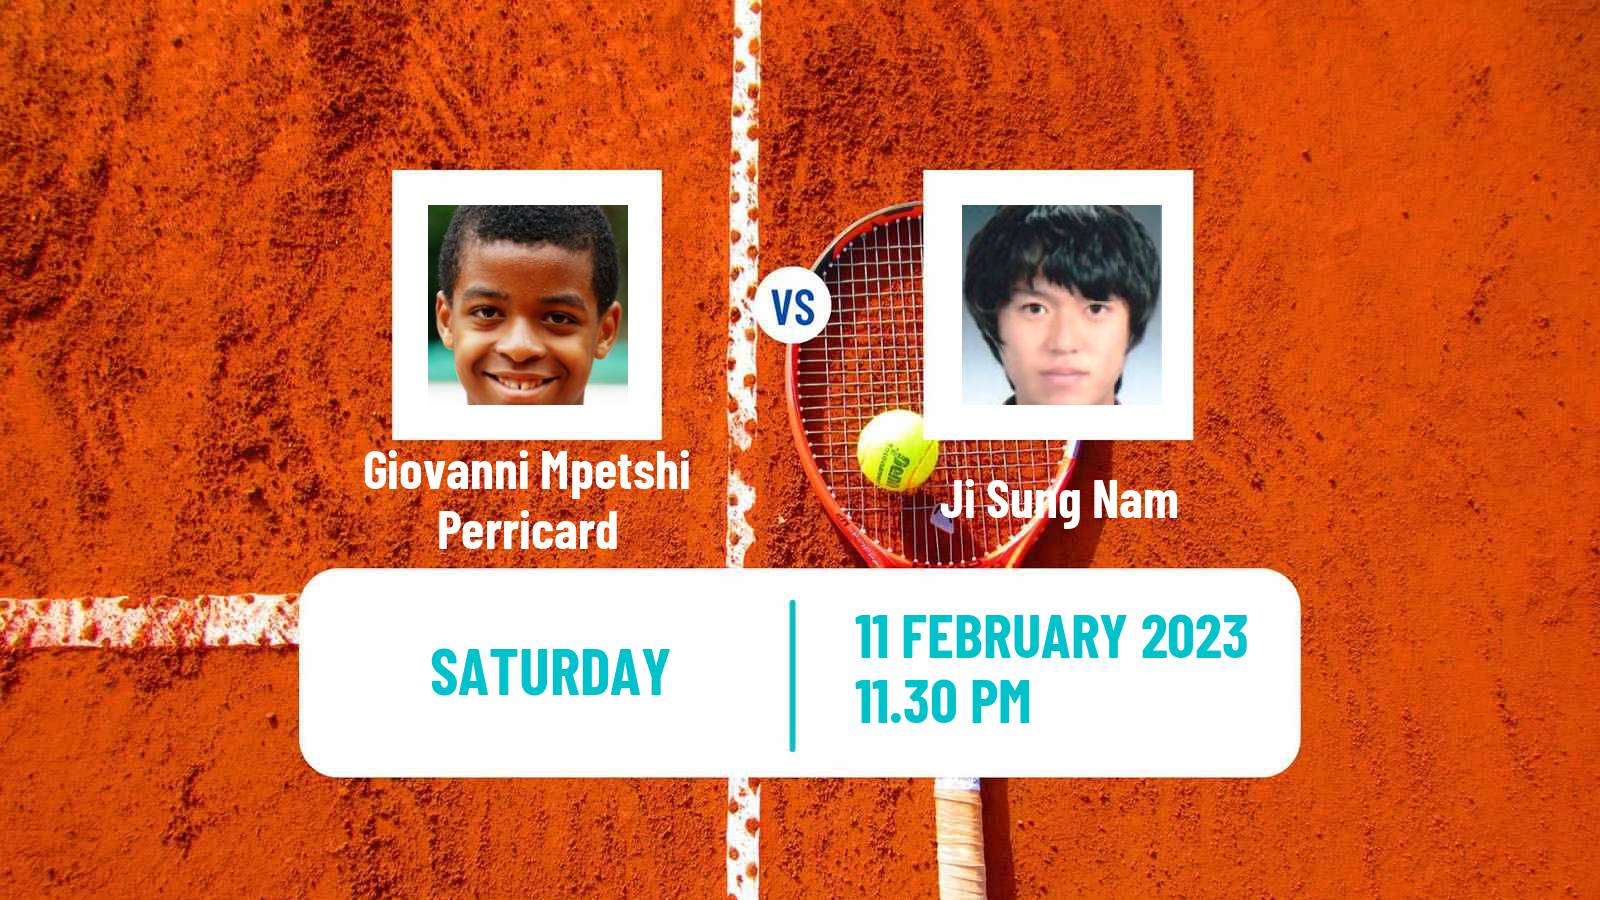 Tennis ATP Challenger Giovanni Mpetshi Perricard - Ji Sung Nam